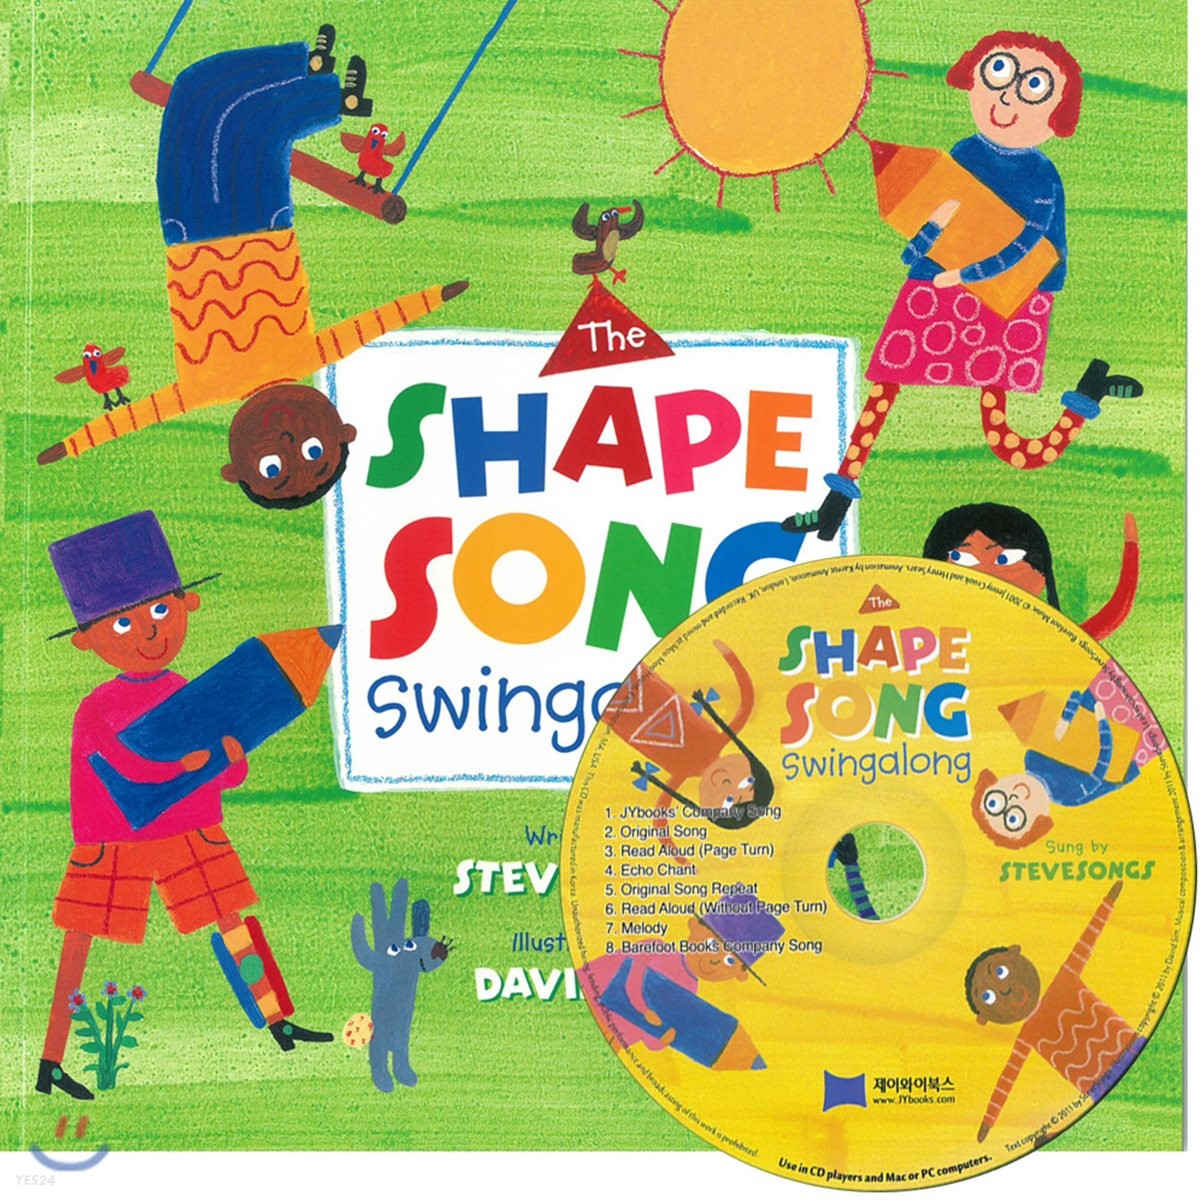 (The)Shape song swingalong 